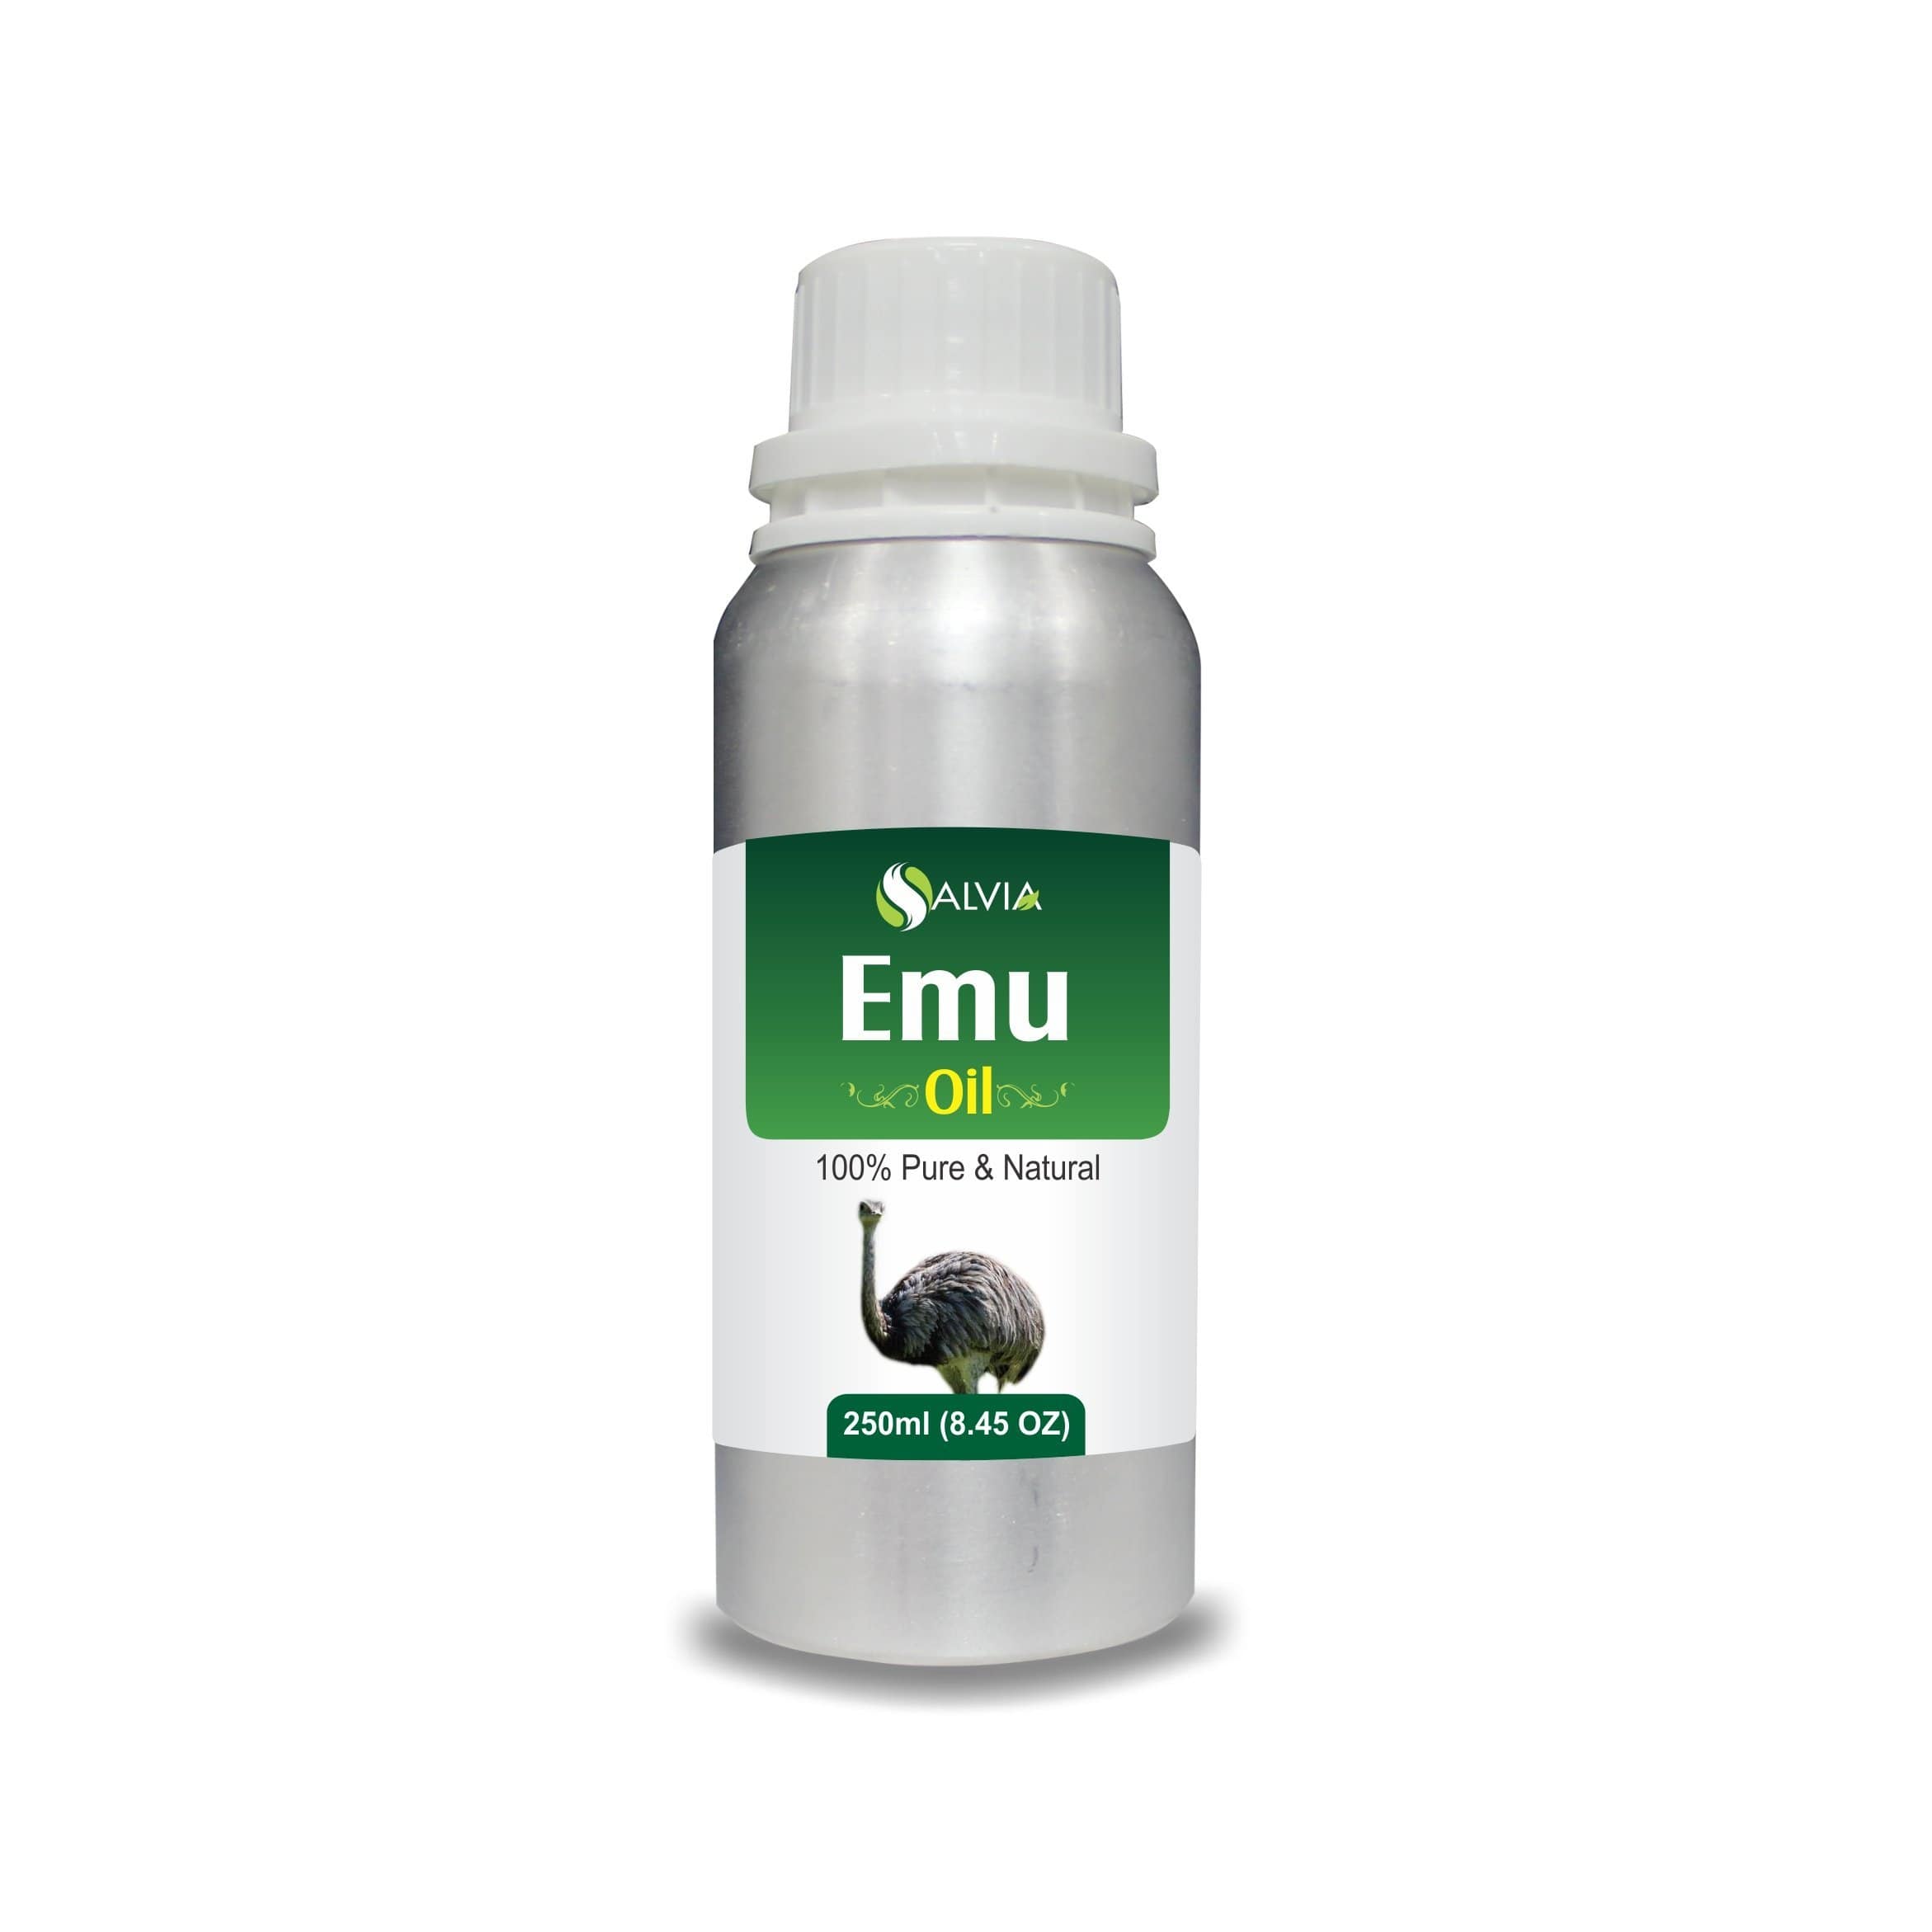 emu oil benefits